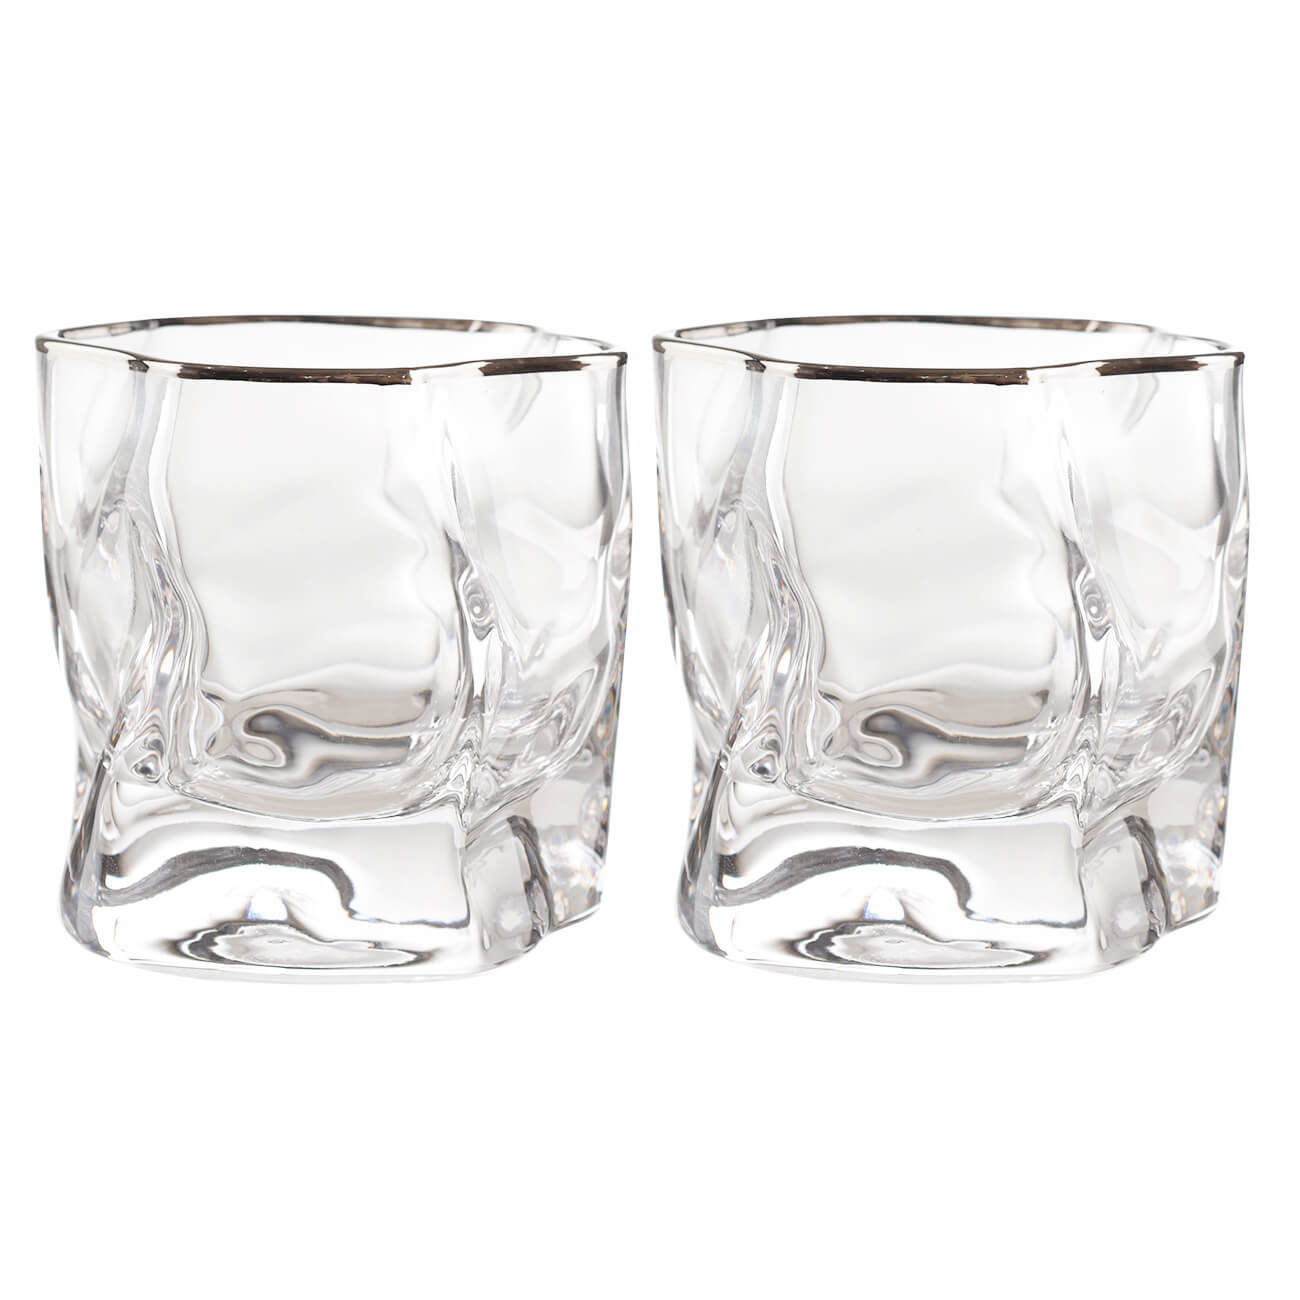 Стакан для виски, 245 мл, 2 шт, стекло, с серебристым кантом, Slalom silver стакан для виски анти стресс 250 мл